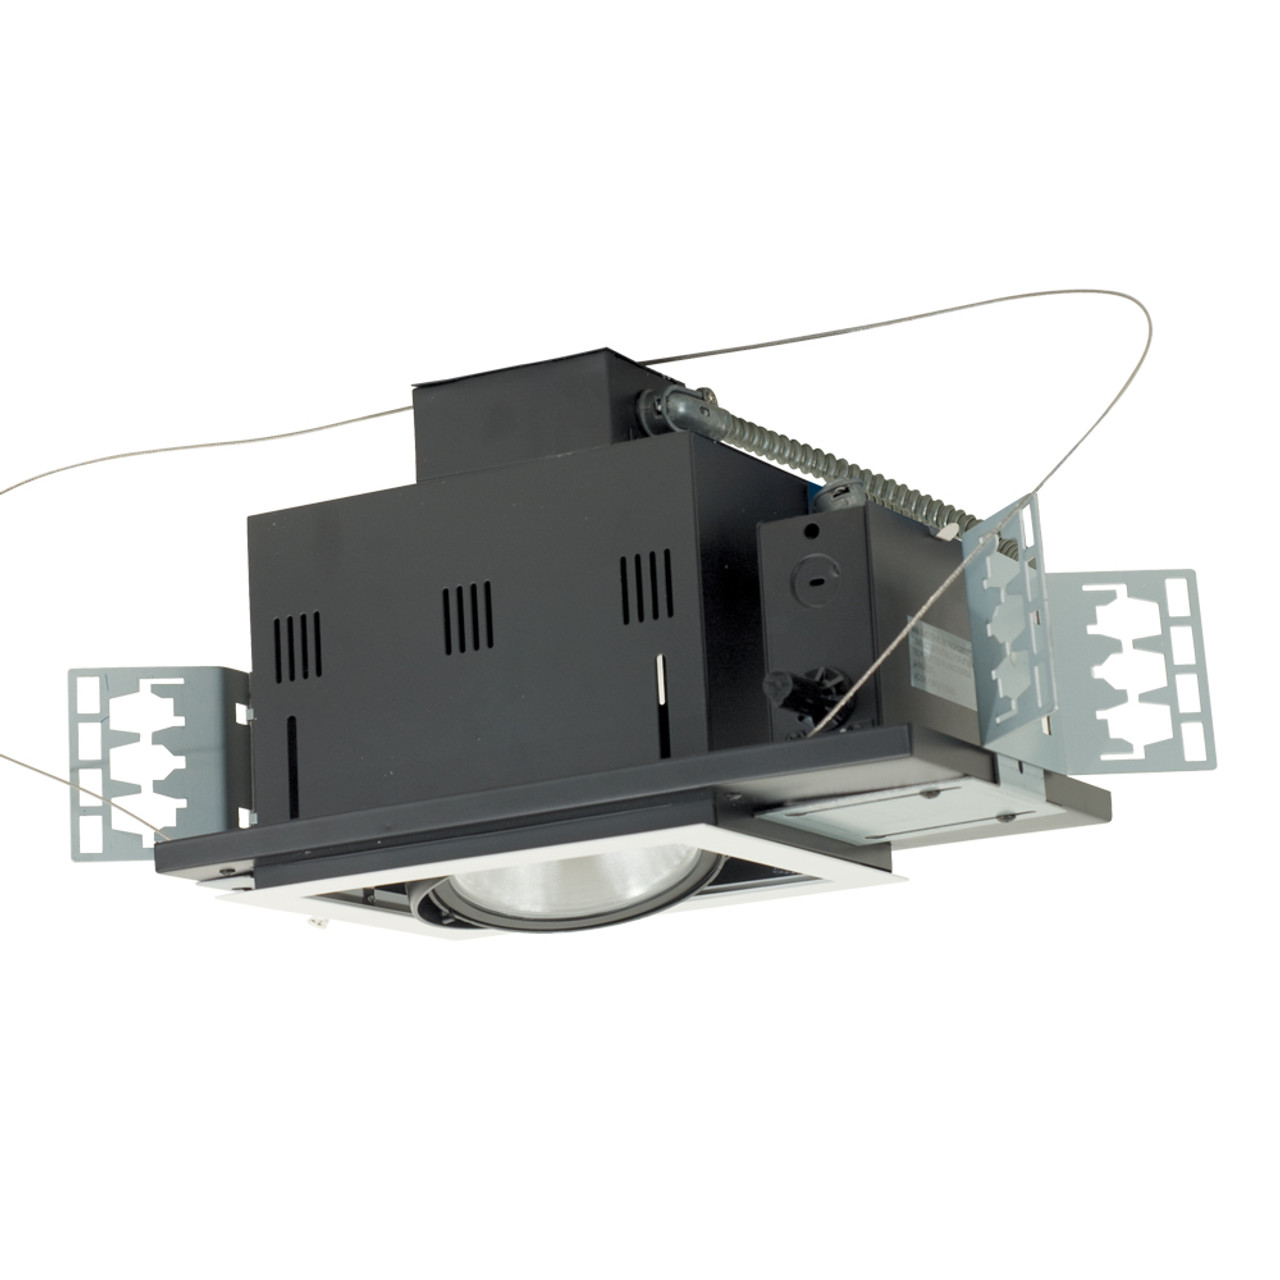 JESCO Lighting MGP38-1WB One-Light Double Gimbal Recessed Line Voltage Fixture, White Trim/Black Gimbal/Black Interior